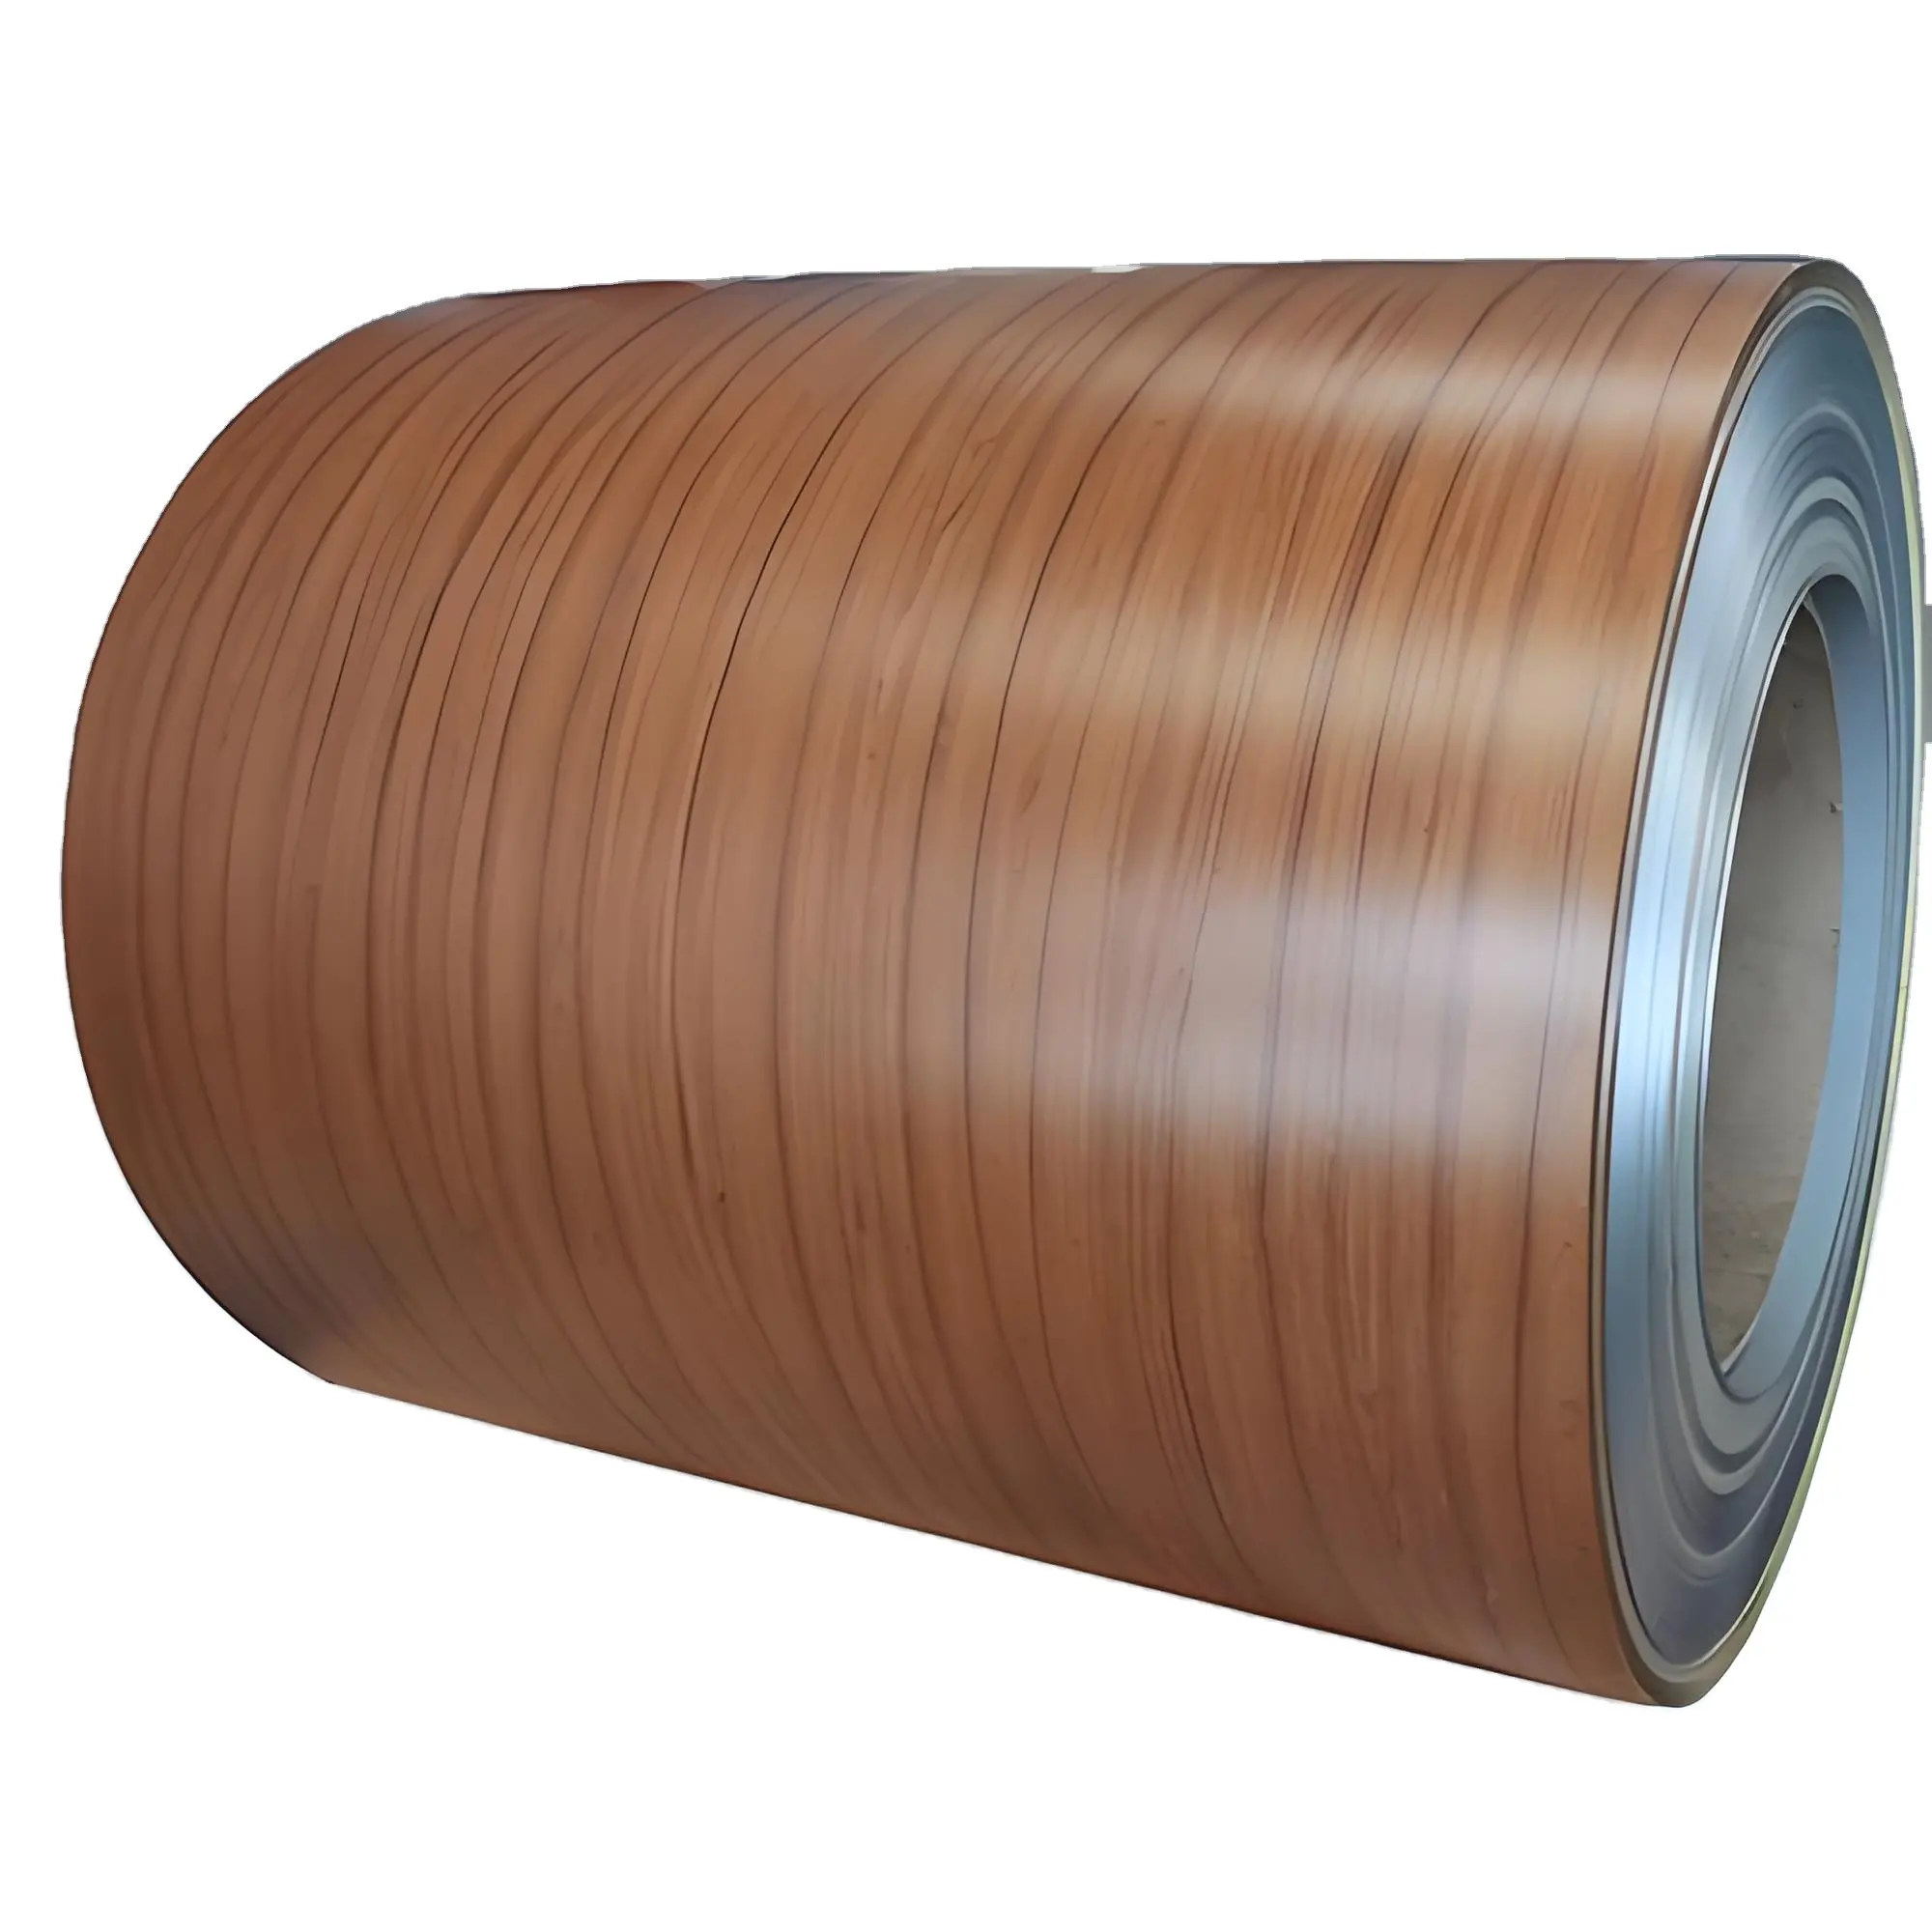 Lámina/bobina de acero laminado de PVC/PET/VCM ampliamente utilizada en impermeabilización de techos, subterráneos, túneles, lagos artificiales, etc.